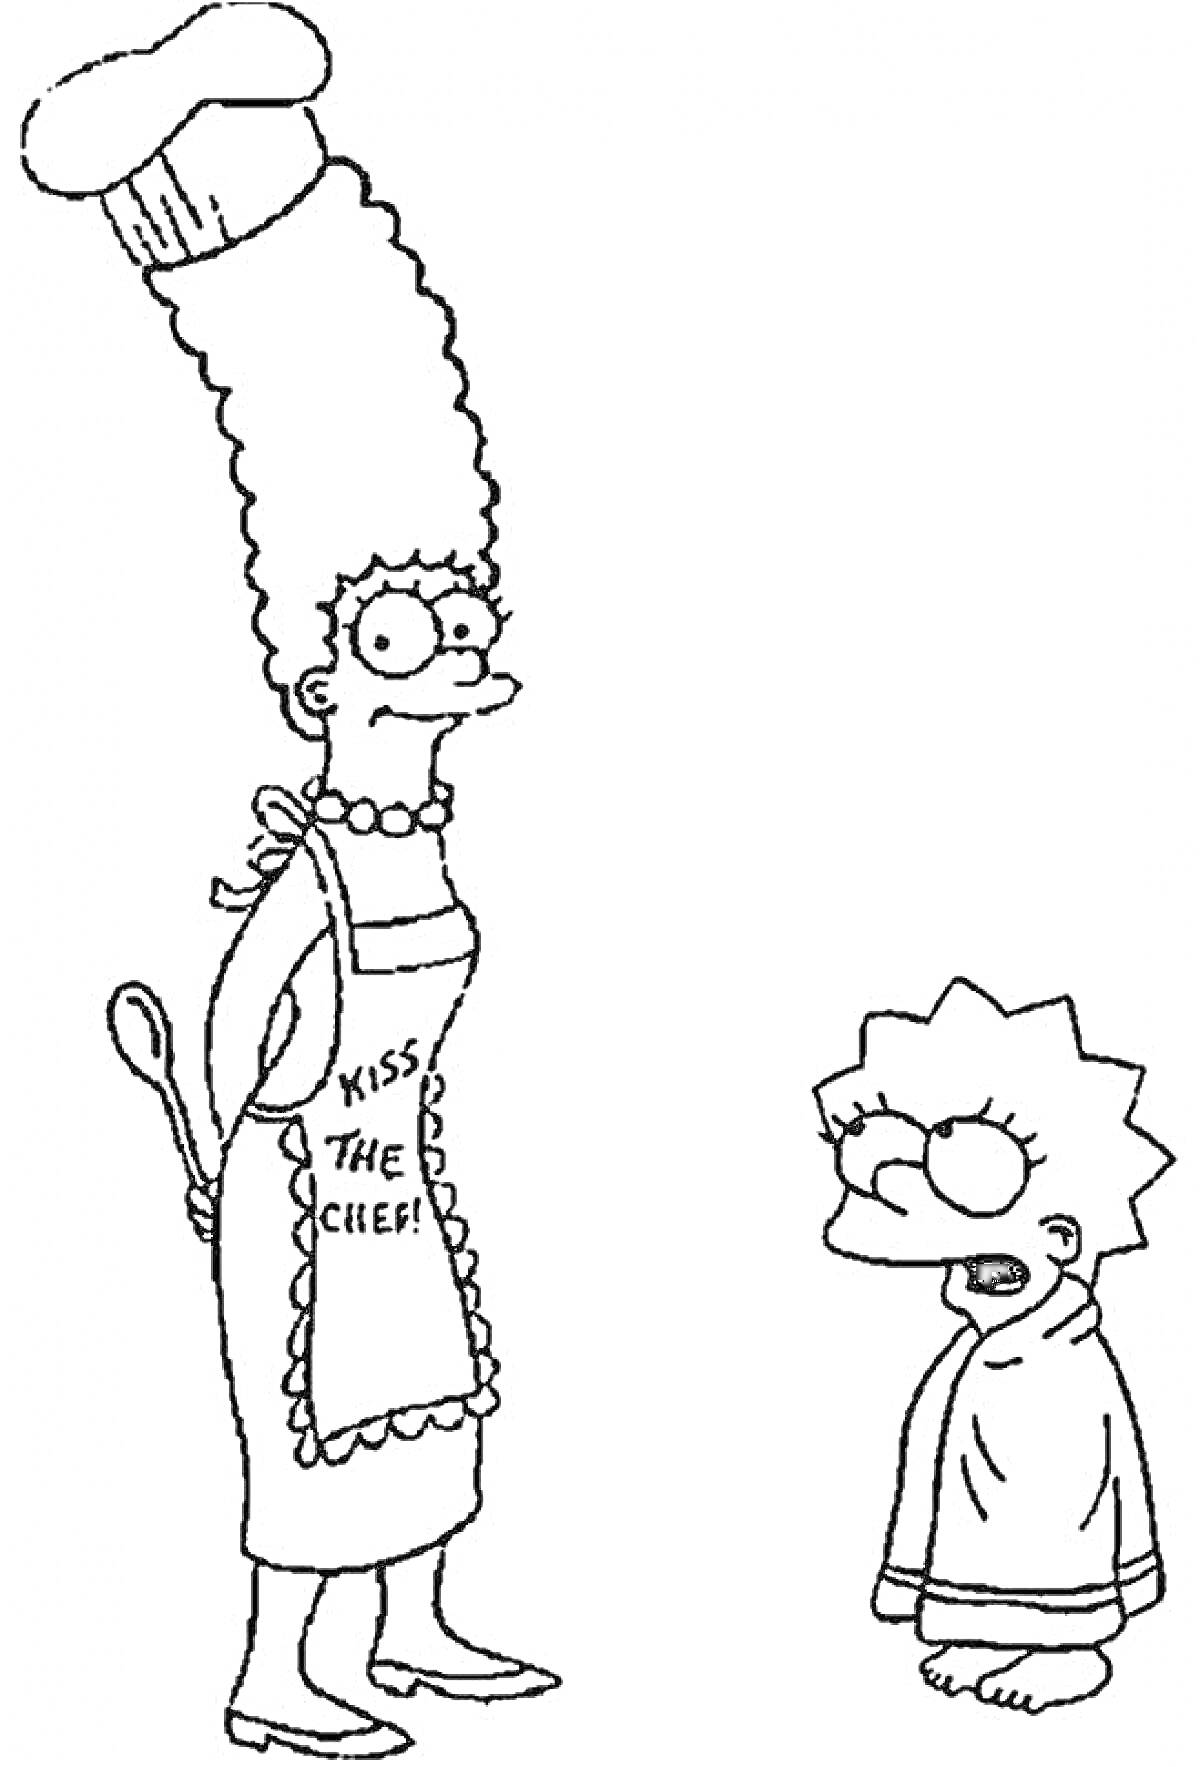 Мардж с поварешкой и Лиза